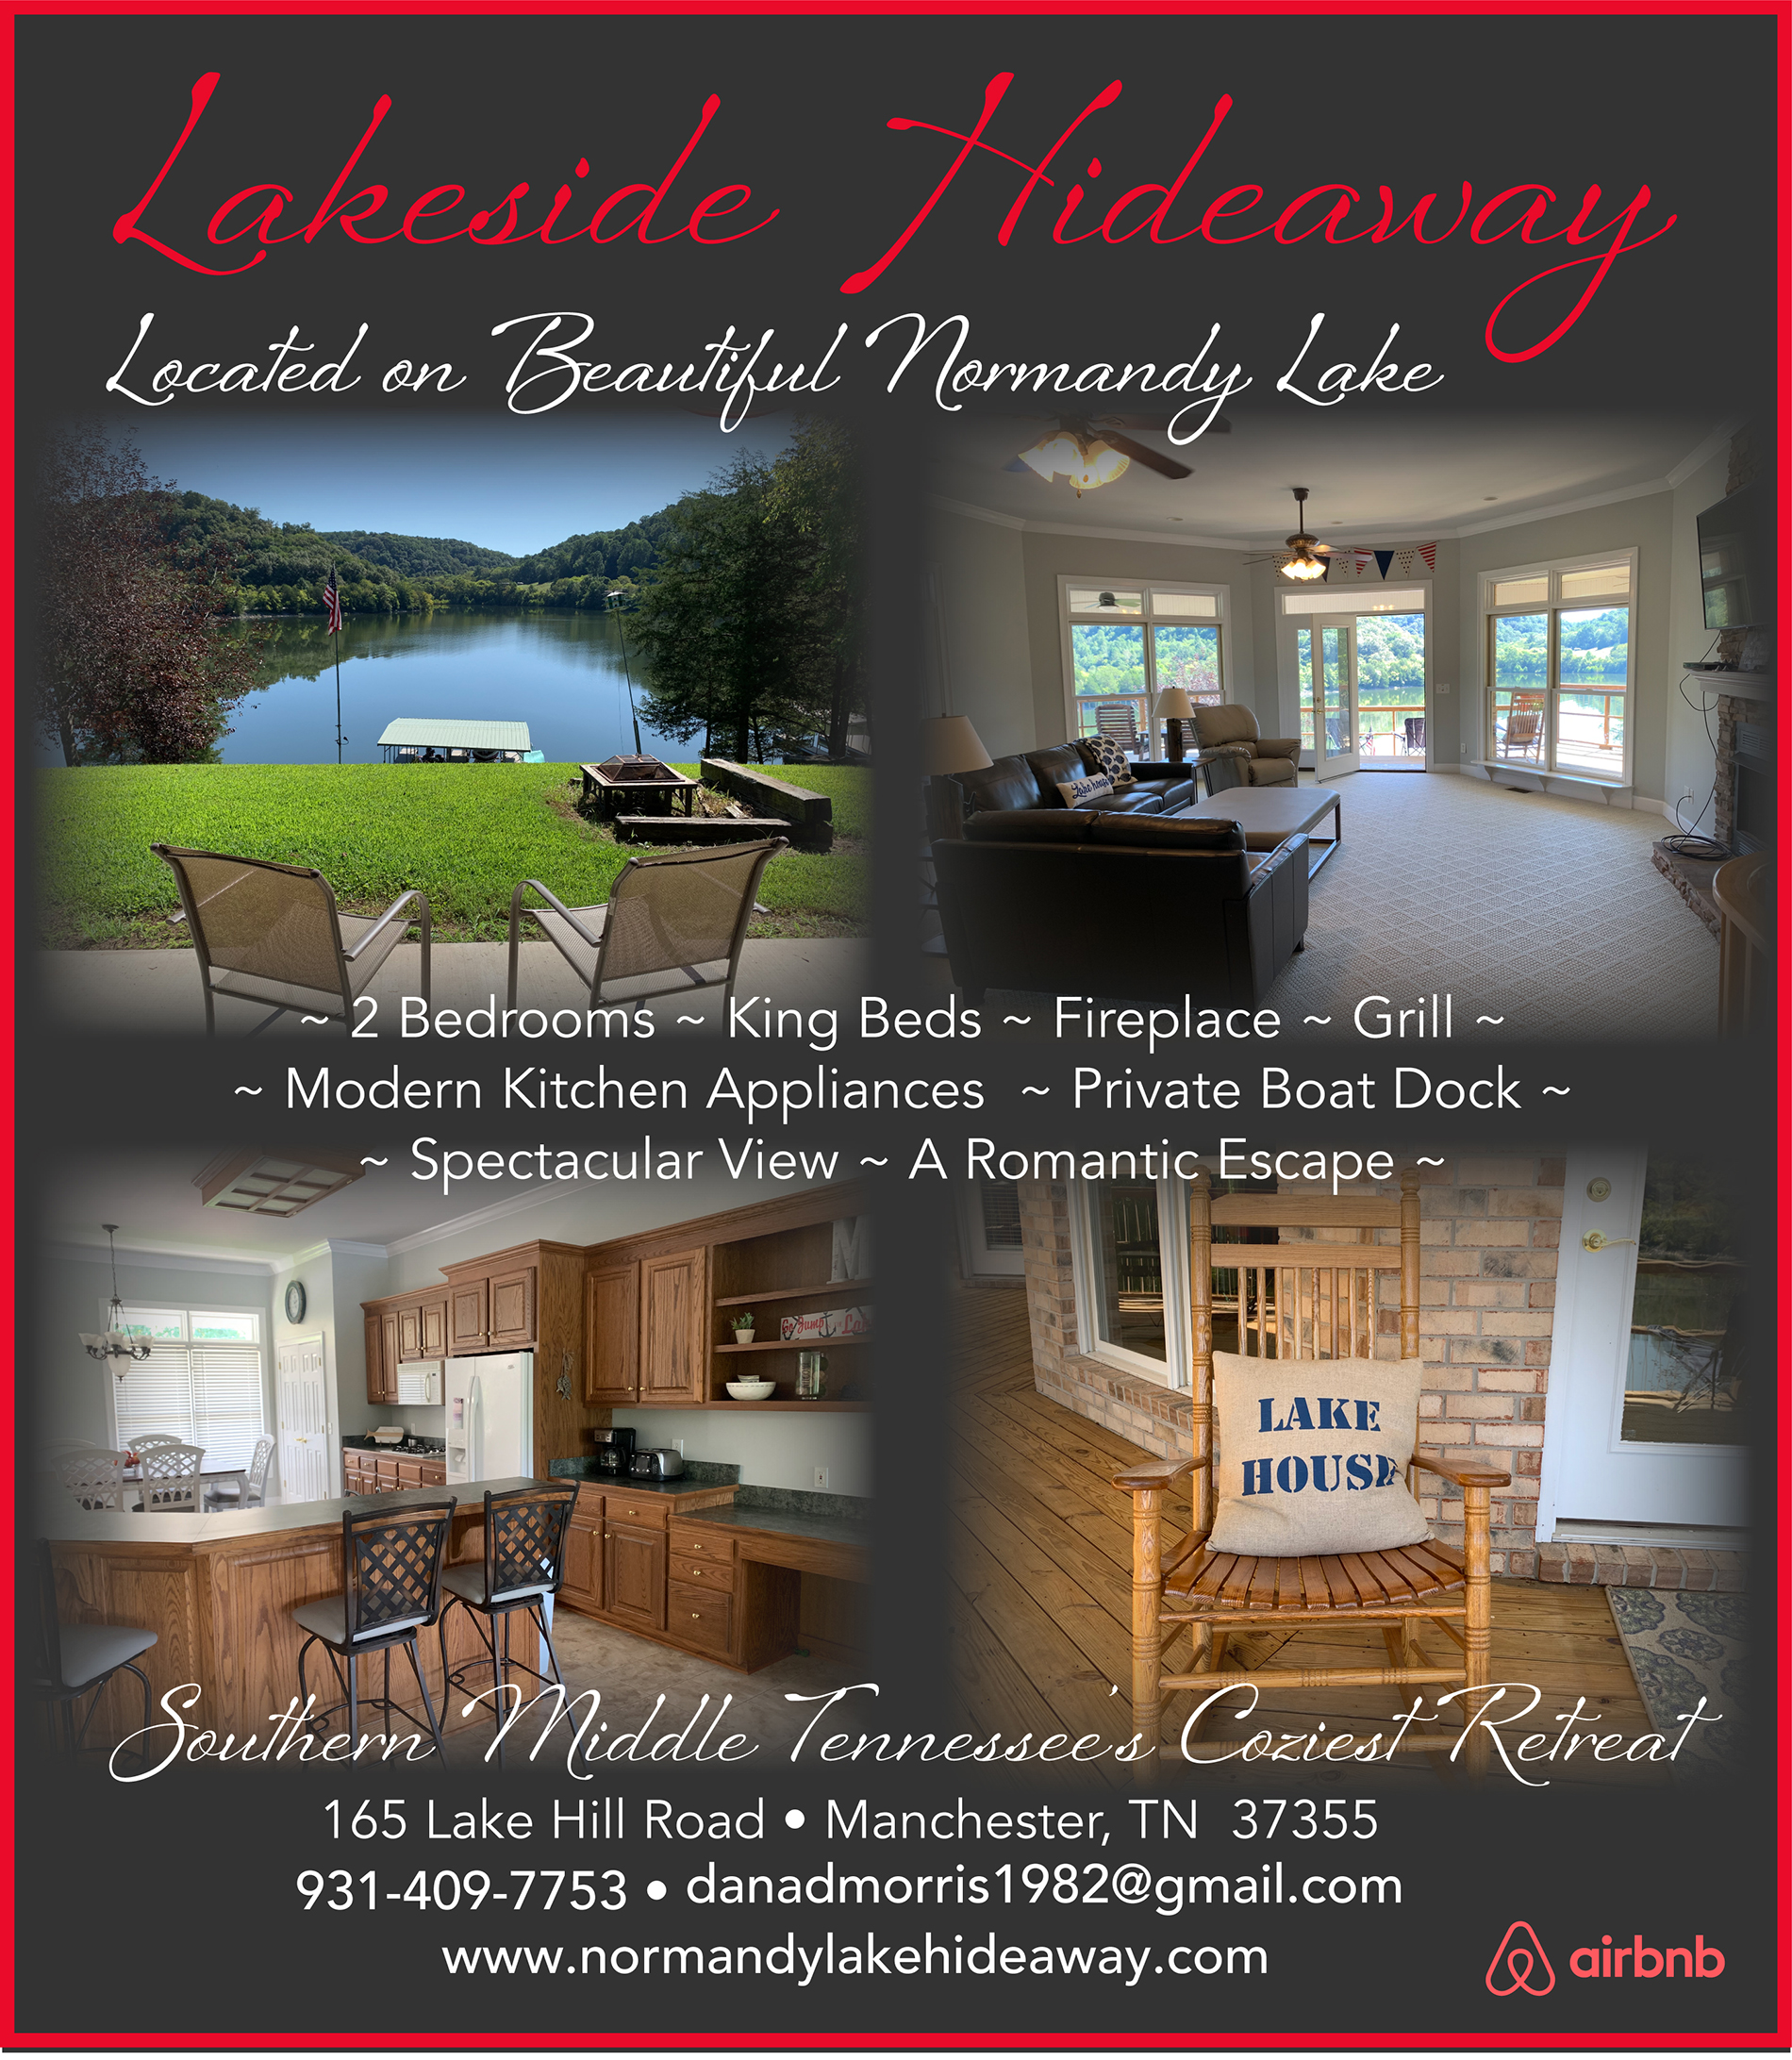 Lakeside retreat ad